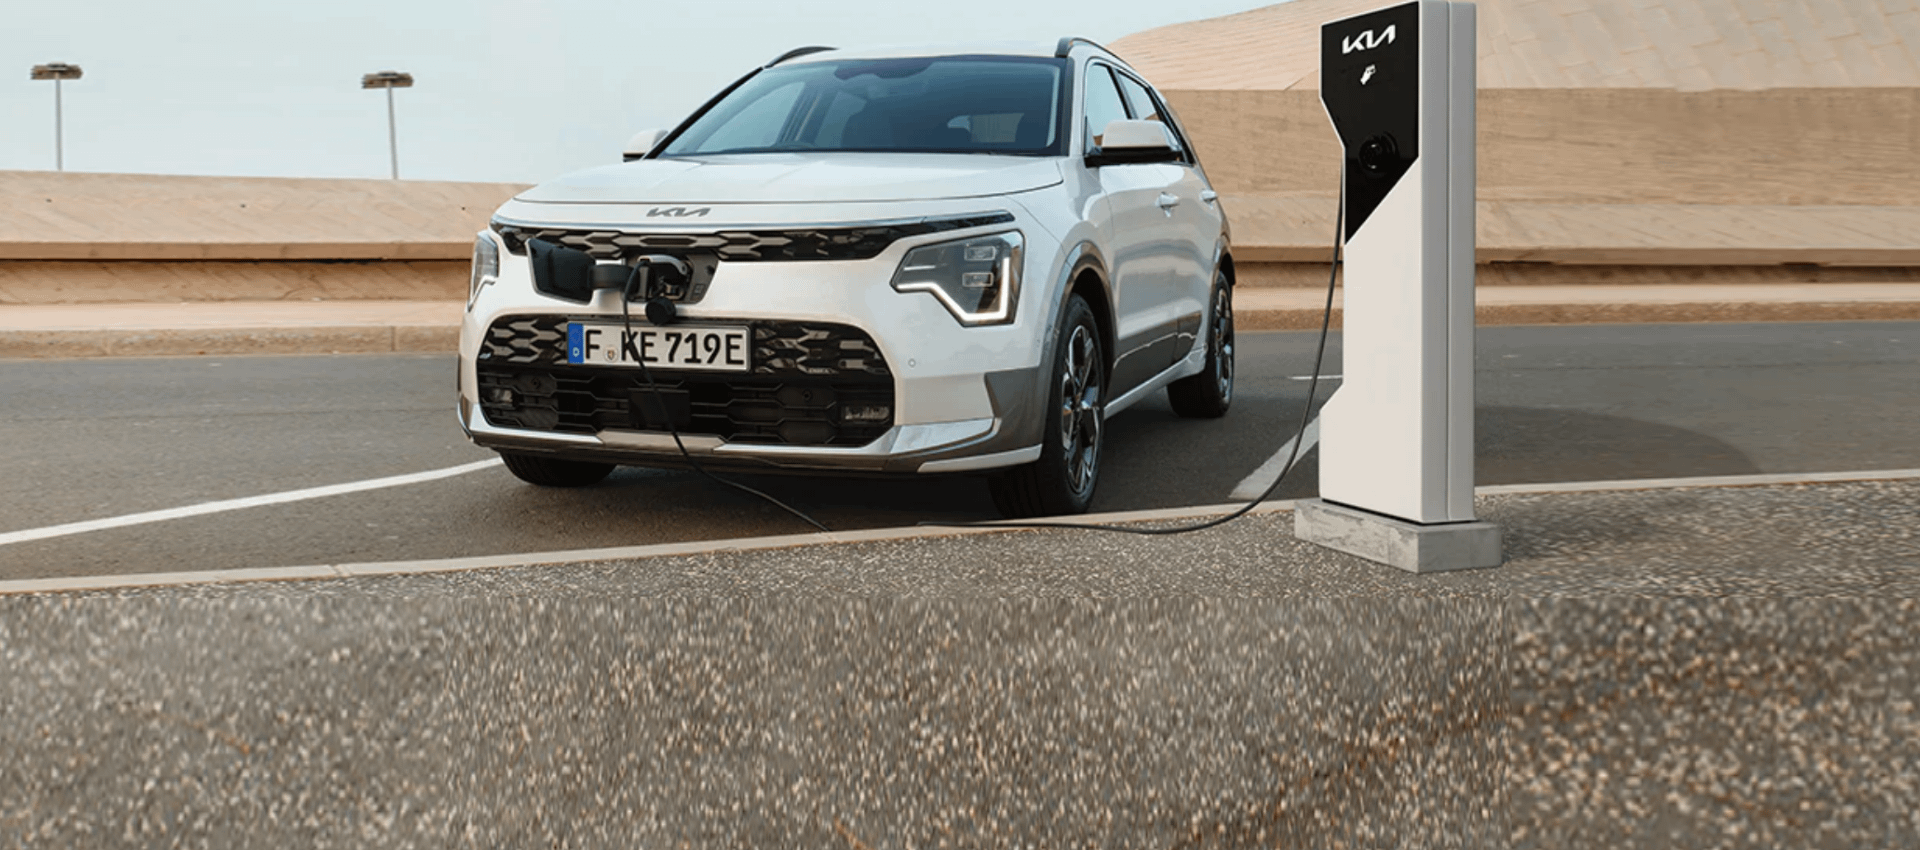 Niro Self-Charging Hybrid New Car Banner